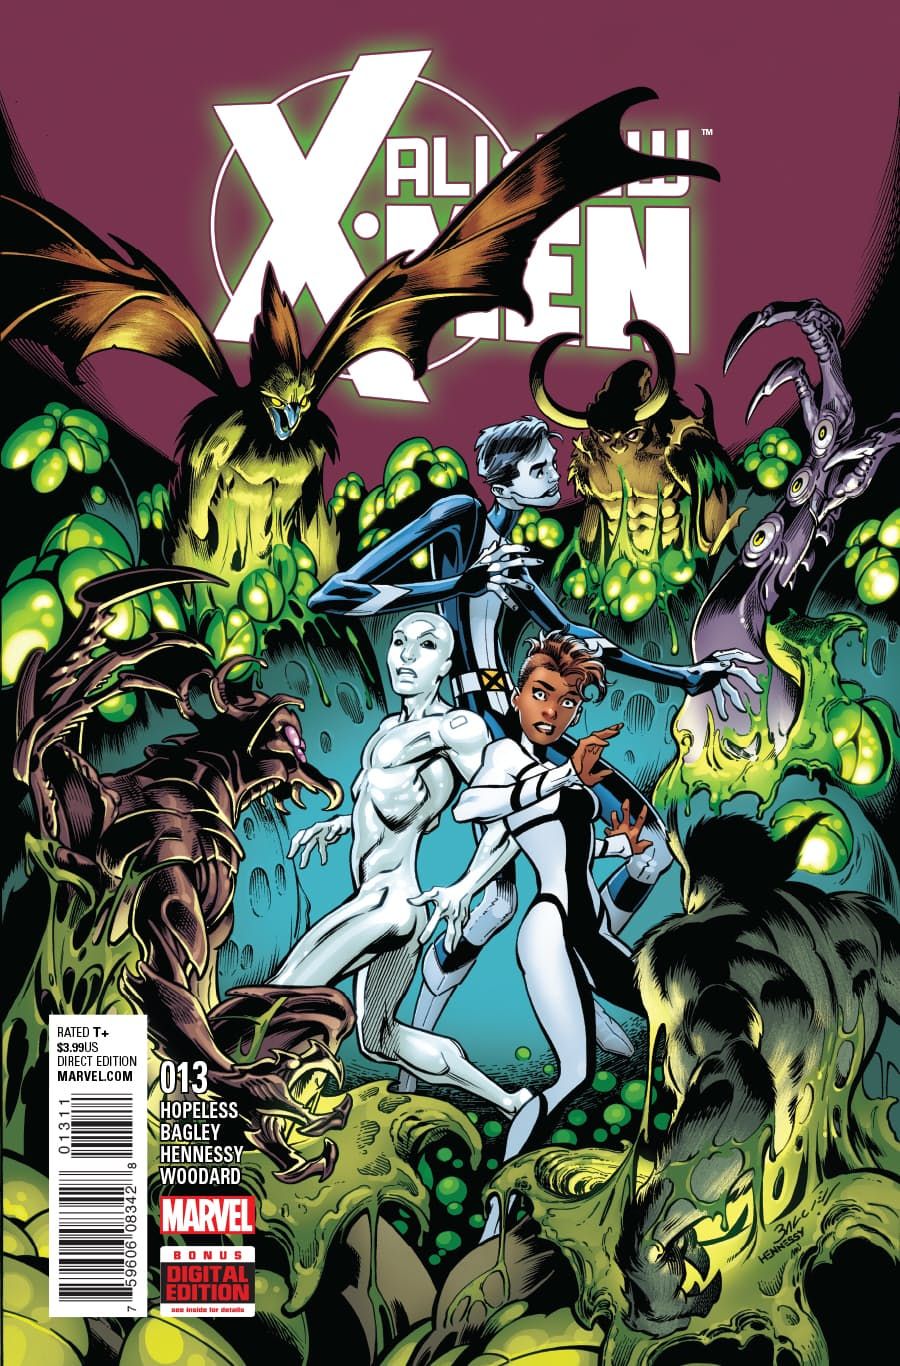 All New X-men #13 Comic